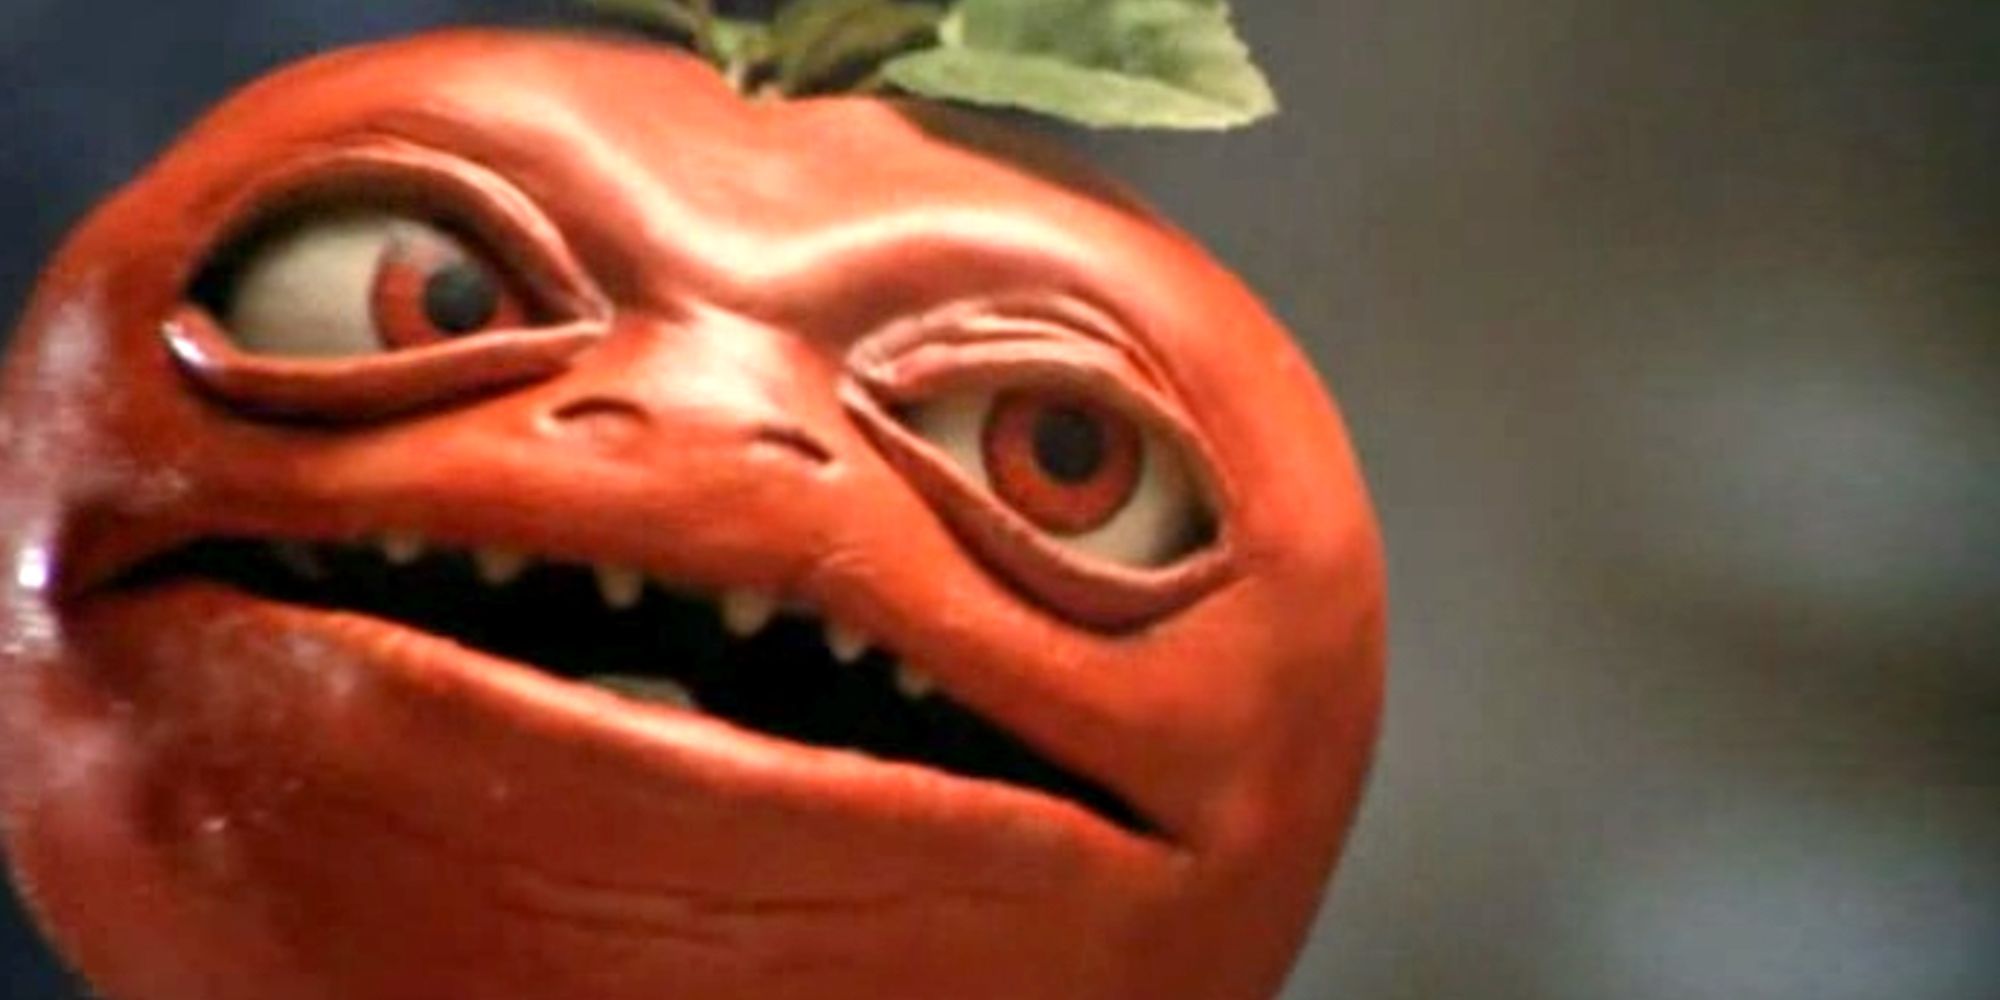 A Killer Tomato